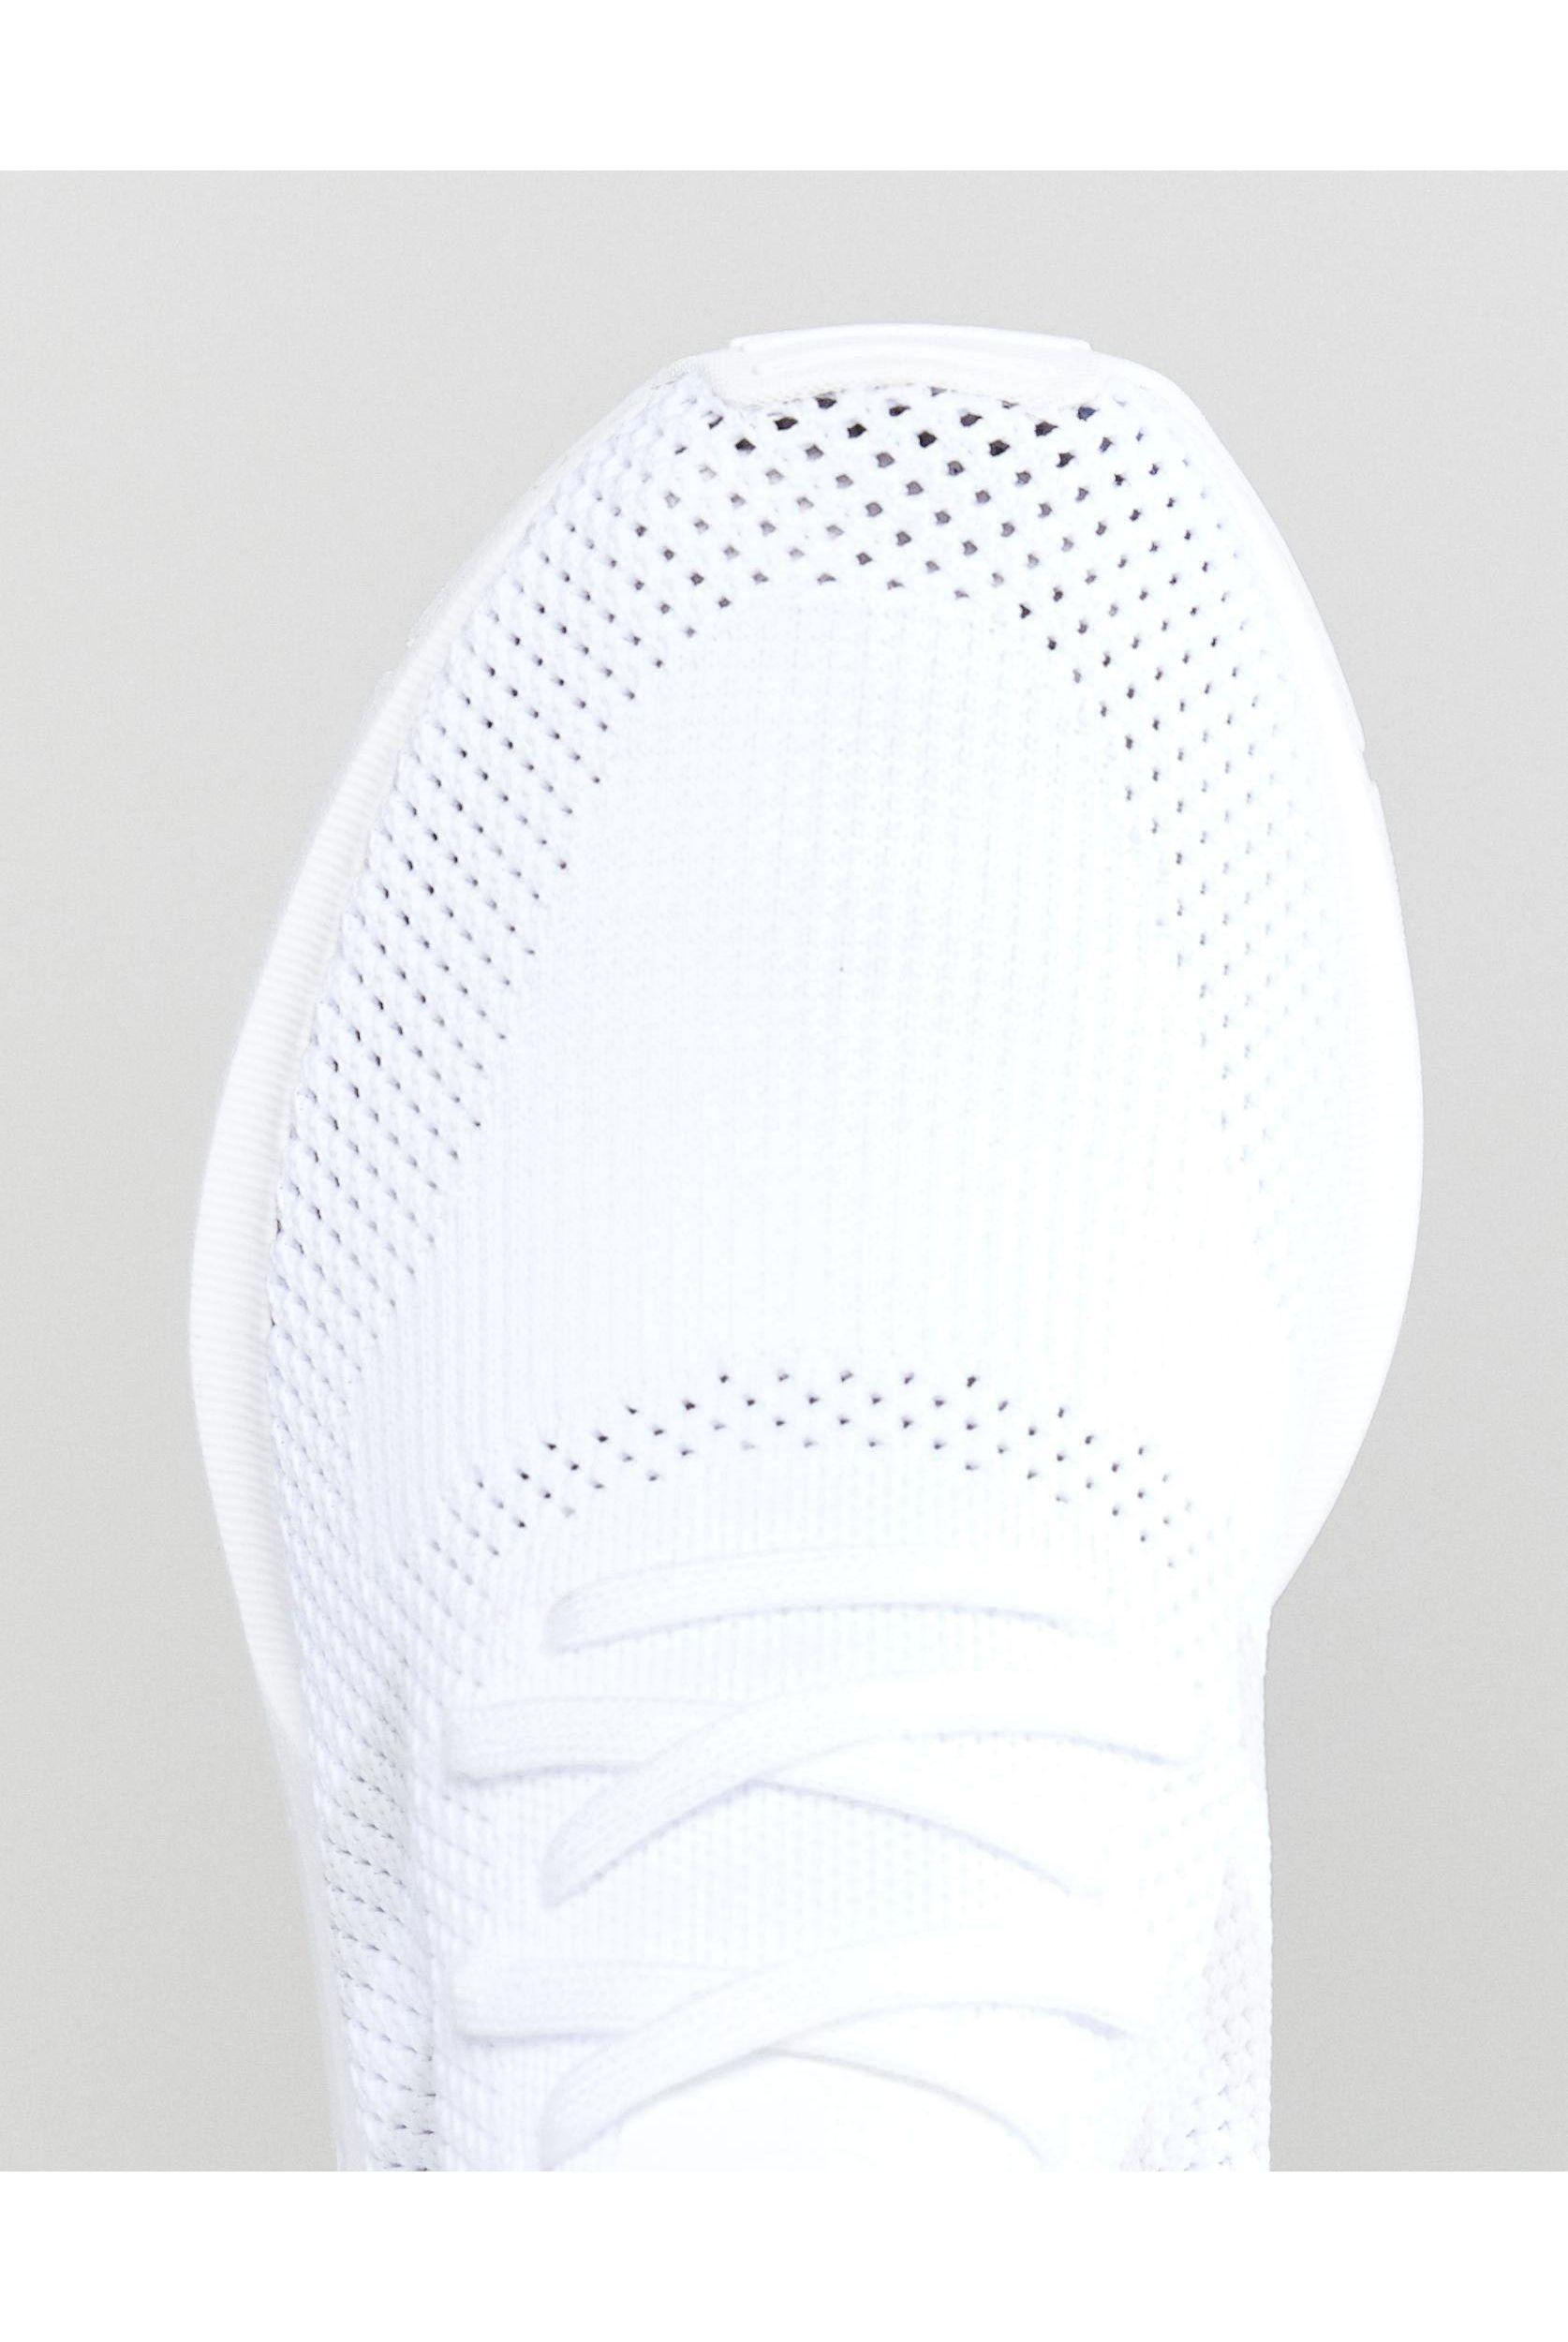 adidas Originals Swift Run Primeknit Trainers In White Cq2892 for Men | Lyst